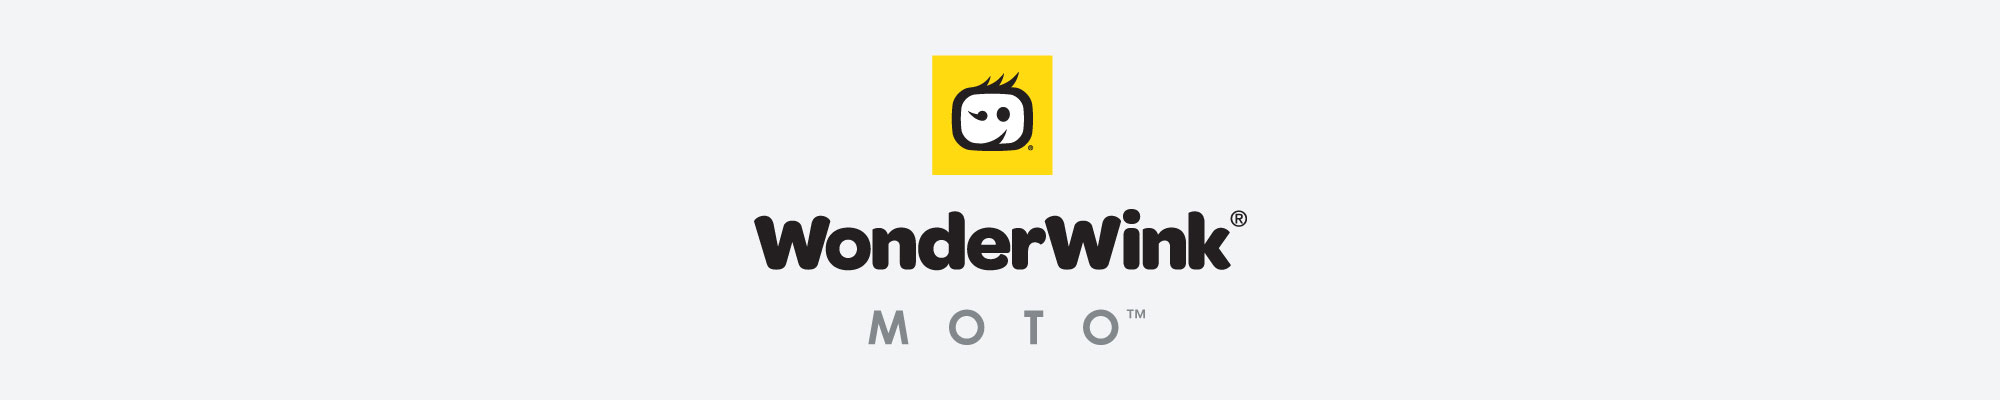 WonderWink Moto